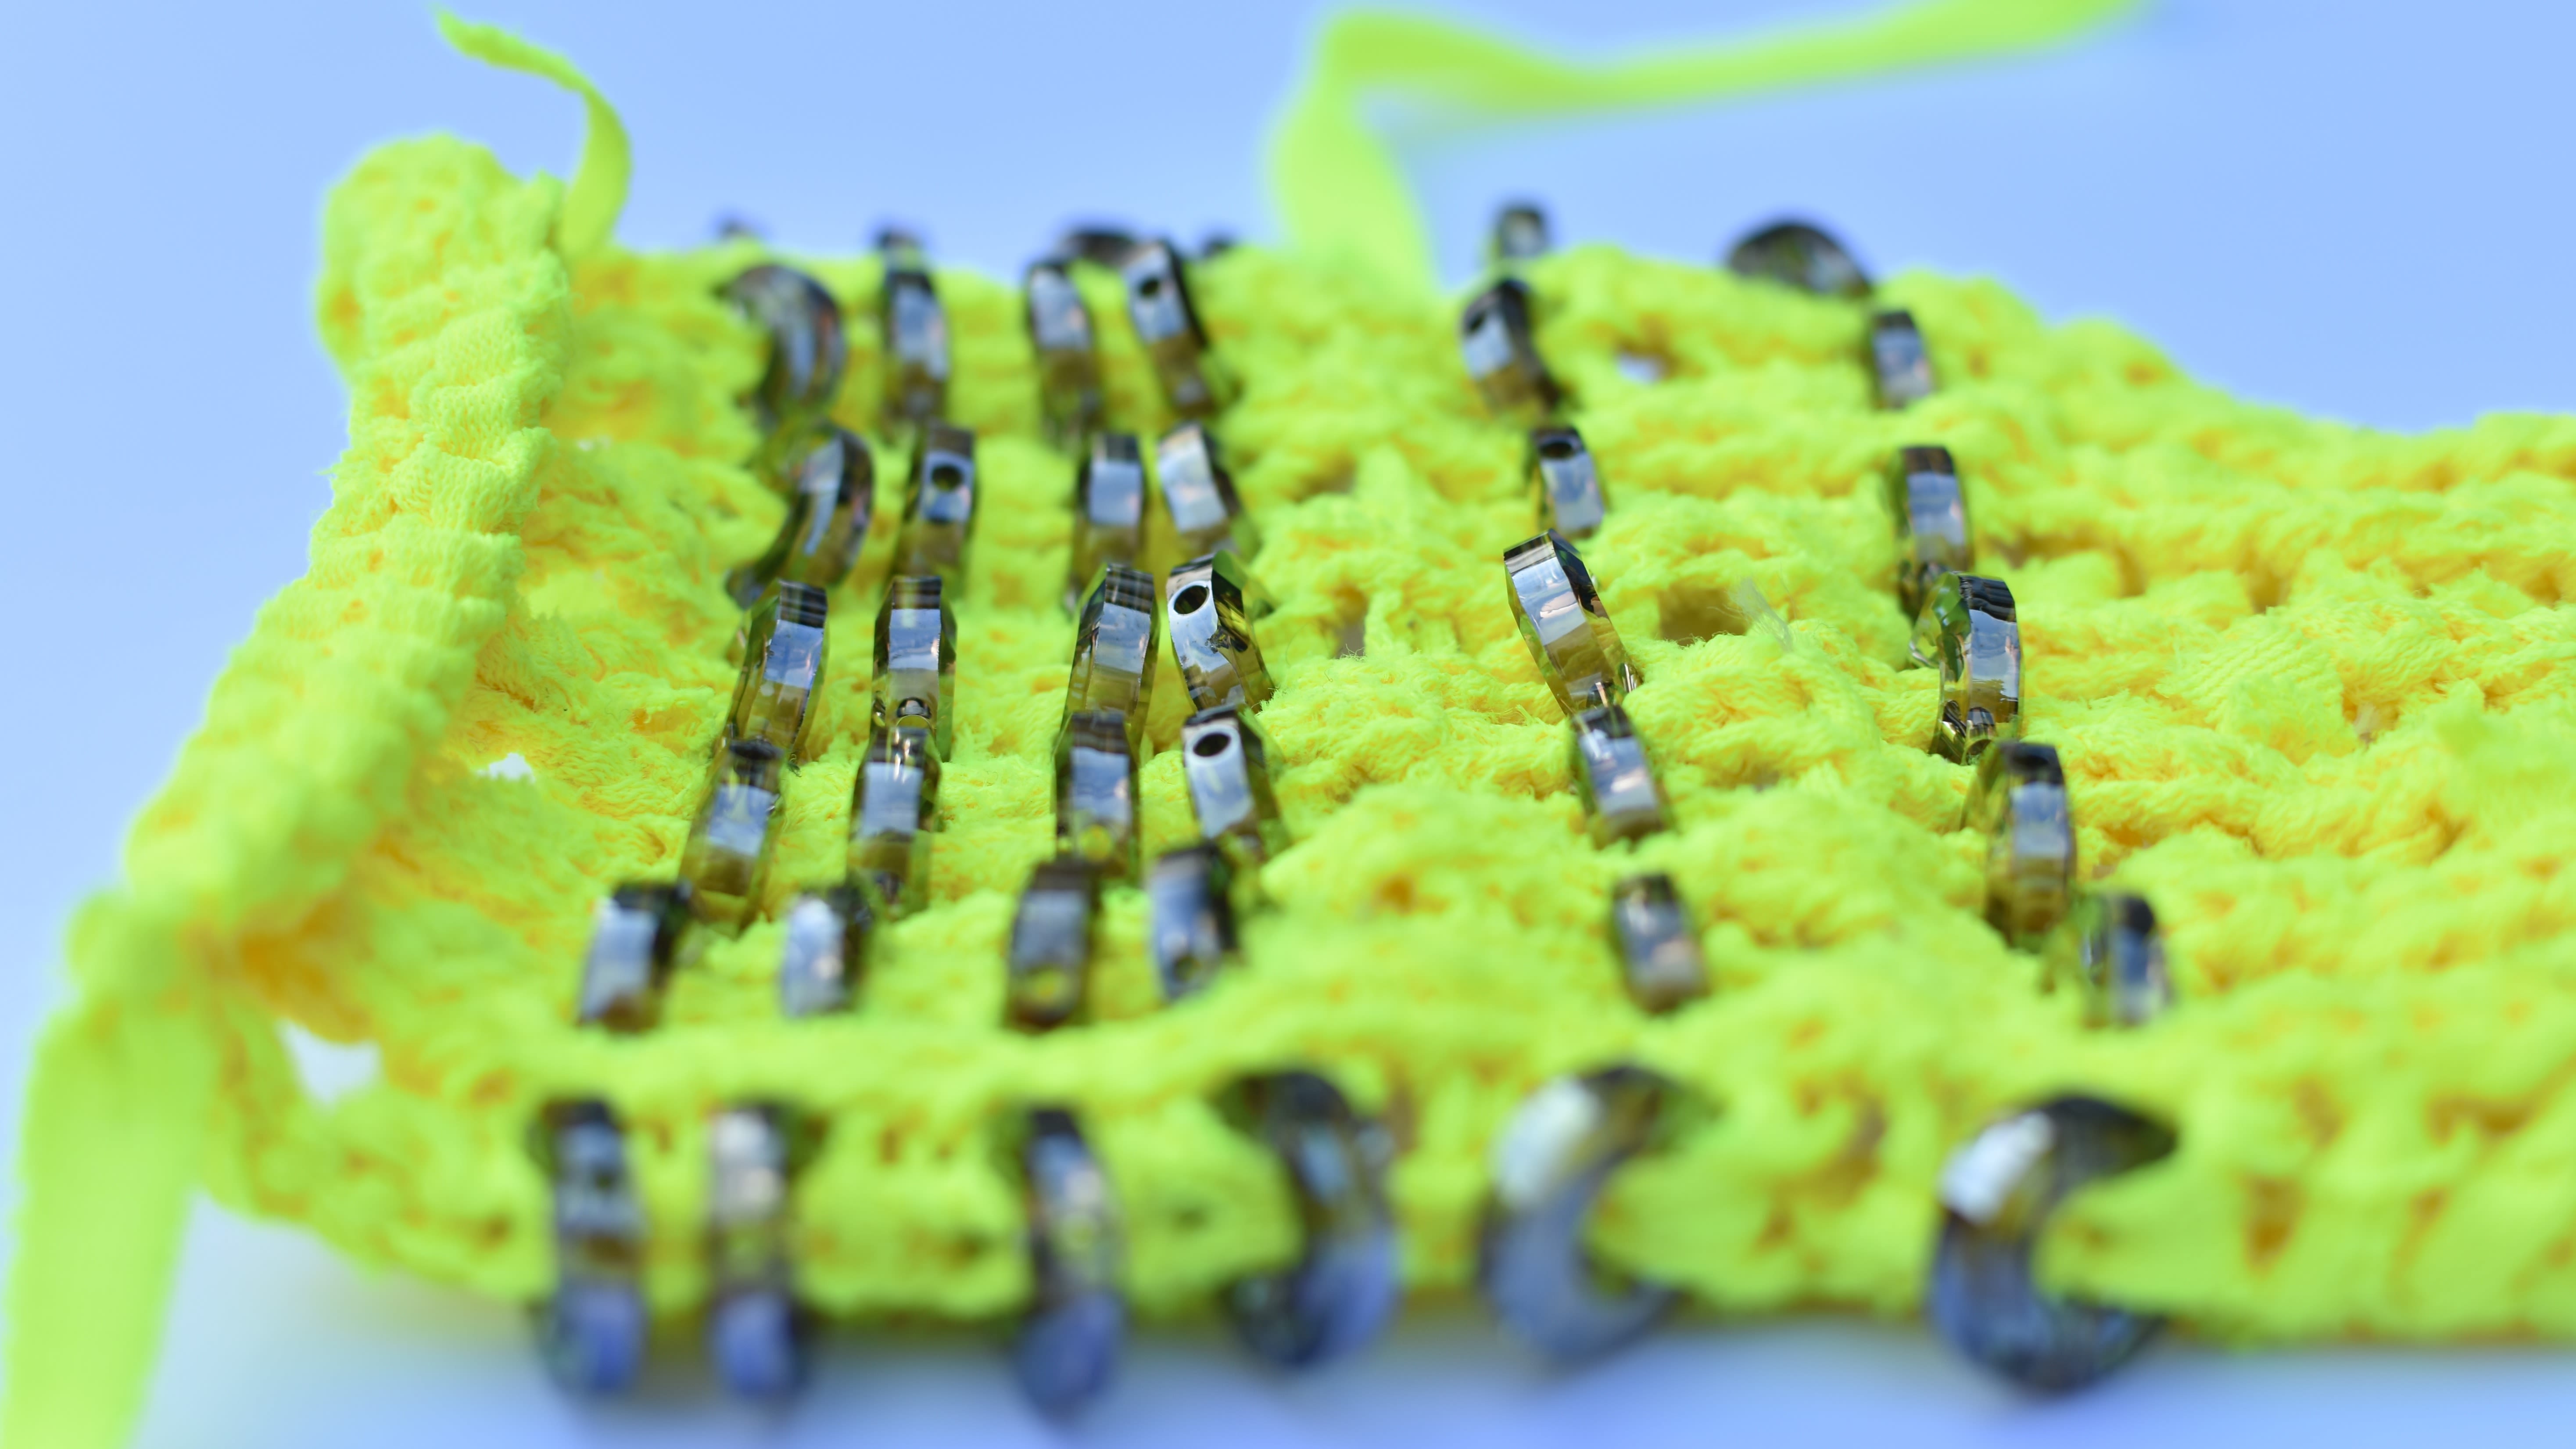 Close up image of Millicent Sanders' Construction Rebellion knit